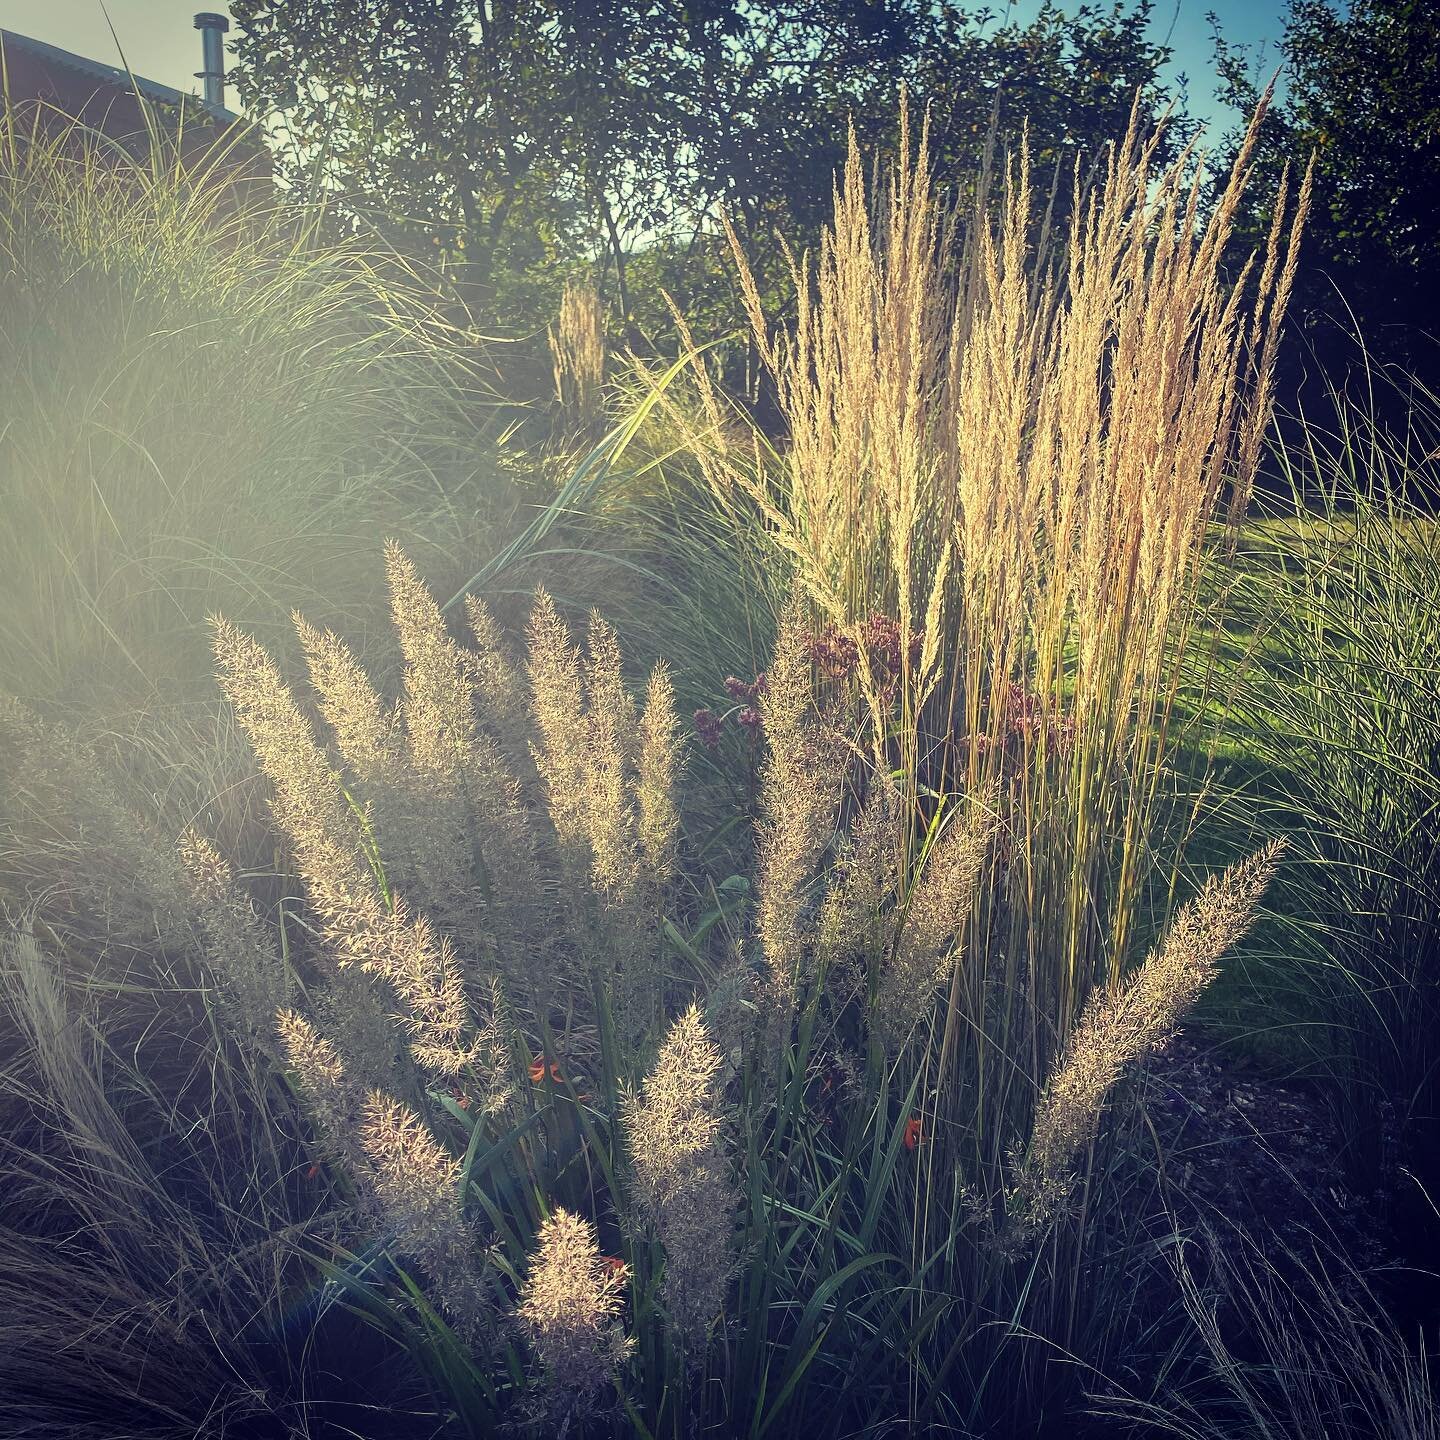 September evening sunlight ... I love you 😘 
.
.
.
#september 
#eveningsunlight 
#grasses 
#ornamentalgrasses 
#ornamentalgrasses🌾 
#shepherdshut 
#shepherdshuts 
#kentcountryside 
#gardenlife 
#prairiestyle 
#prairiegardens 
#sunlight 
#sunlightph